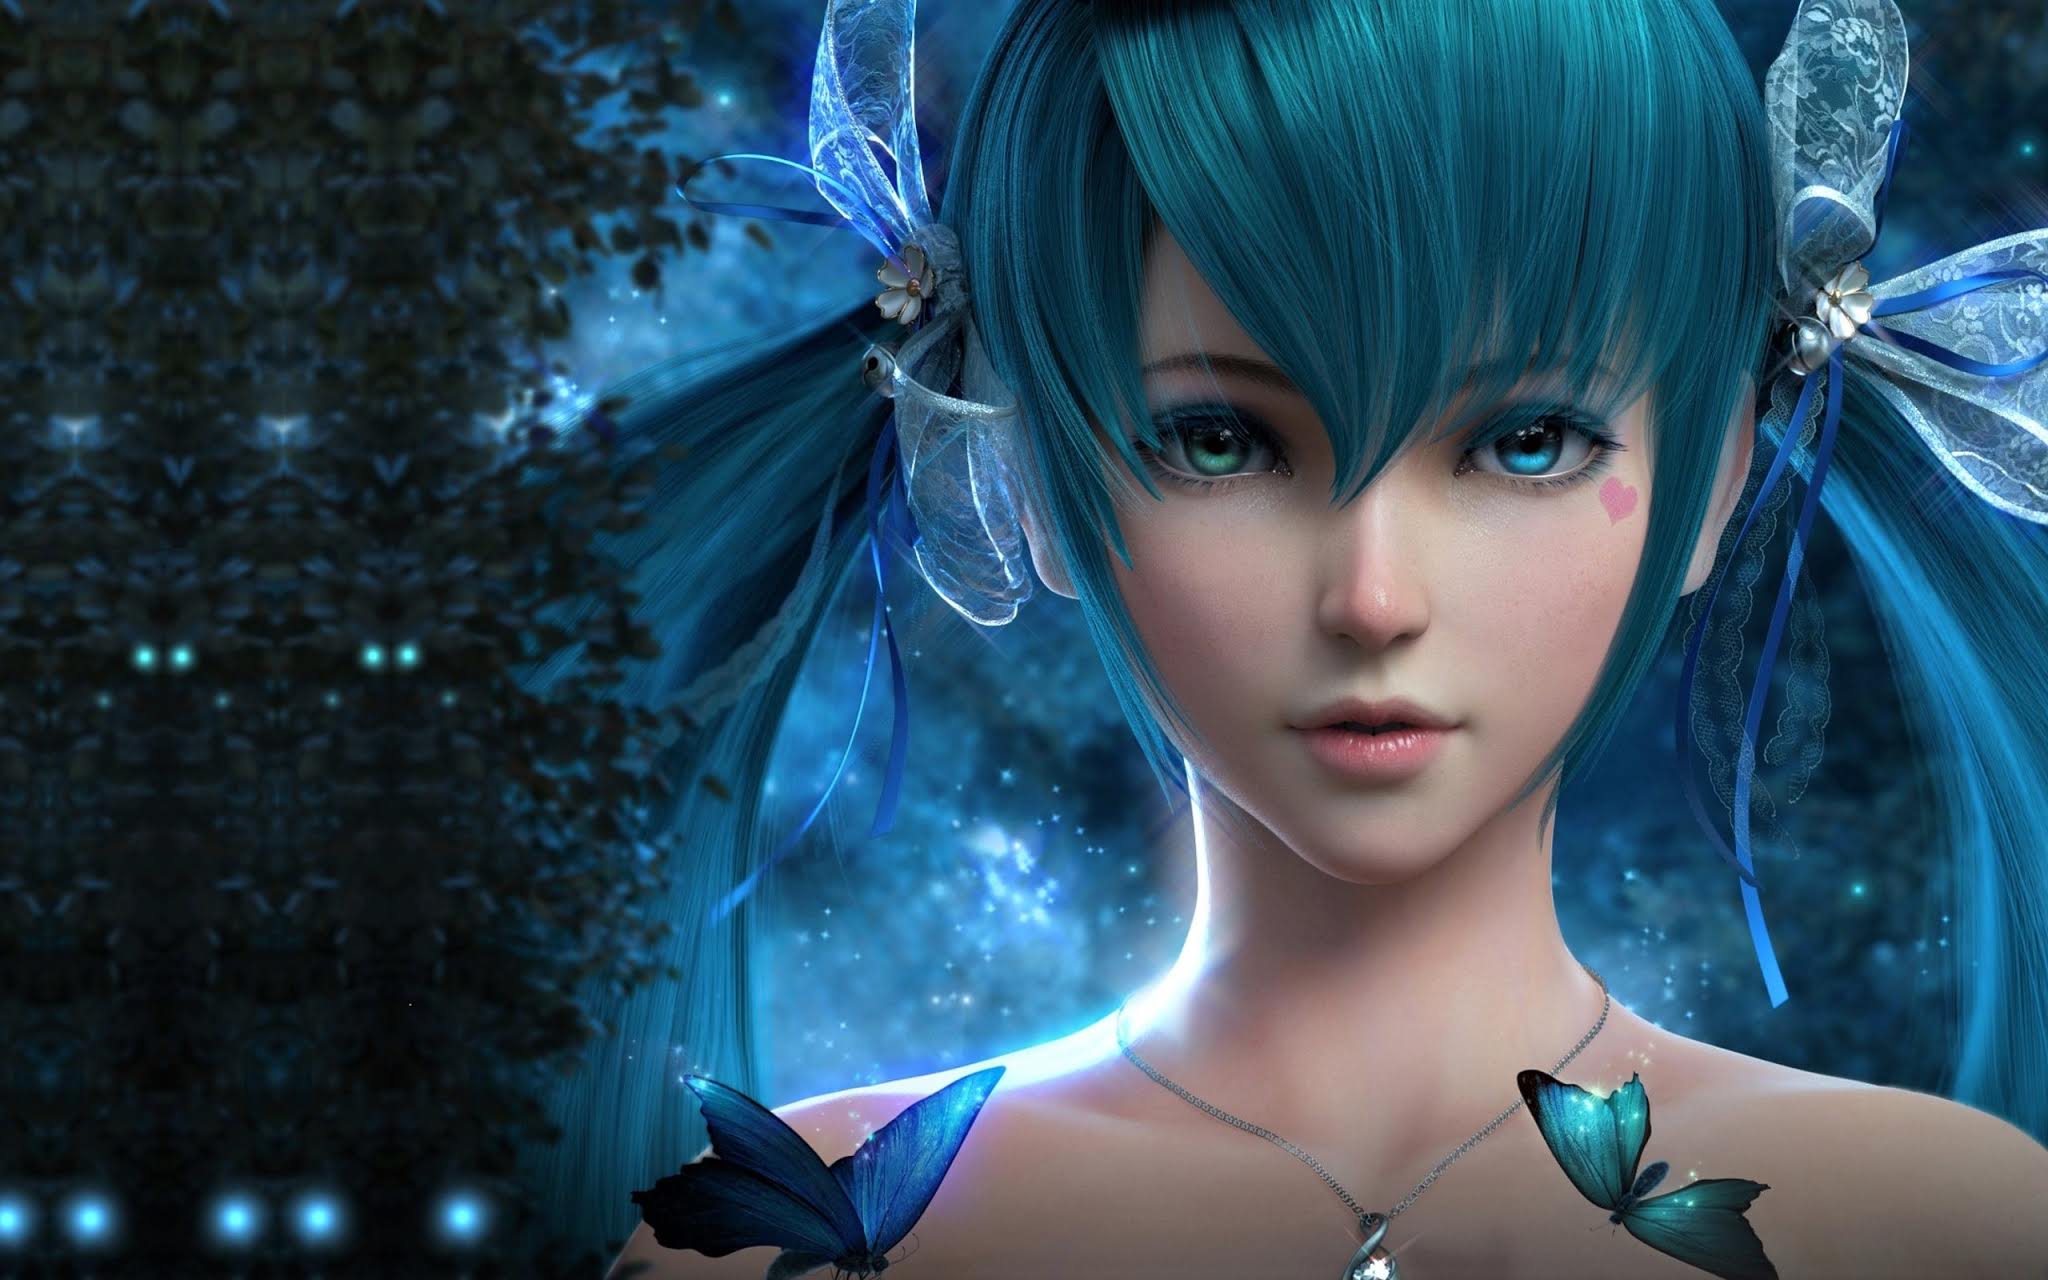 3. Katana-Wielding Insane Anime Girl with Blue Hair - wide 10